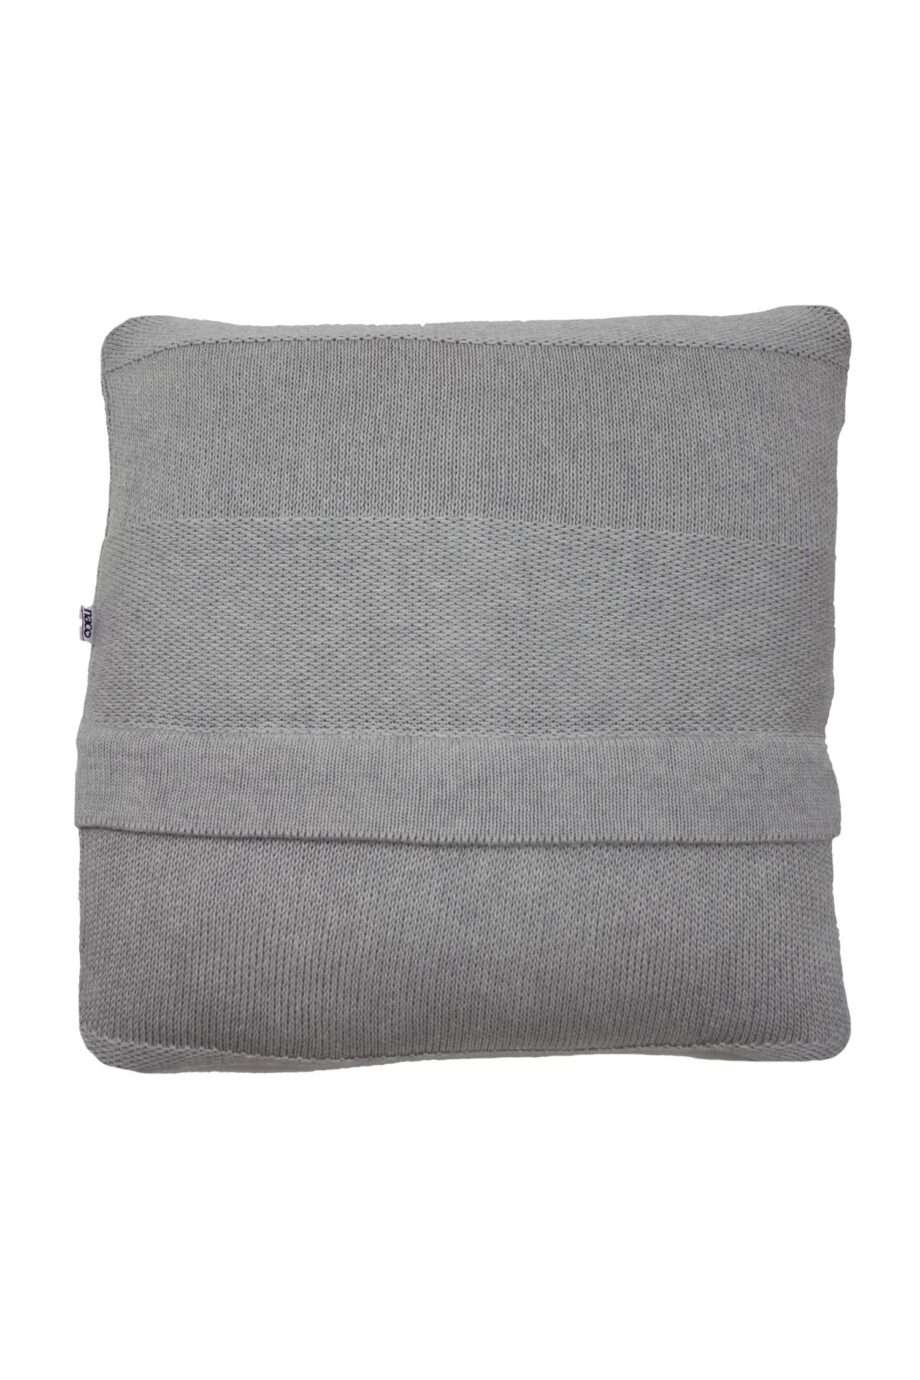 urban light grey knitted cotton pillowcase medium